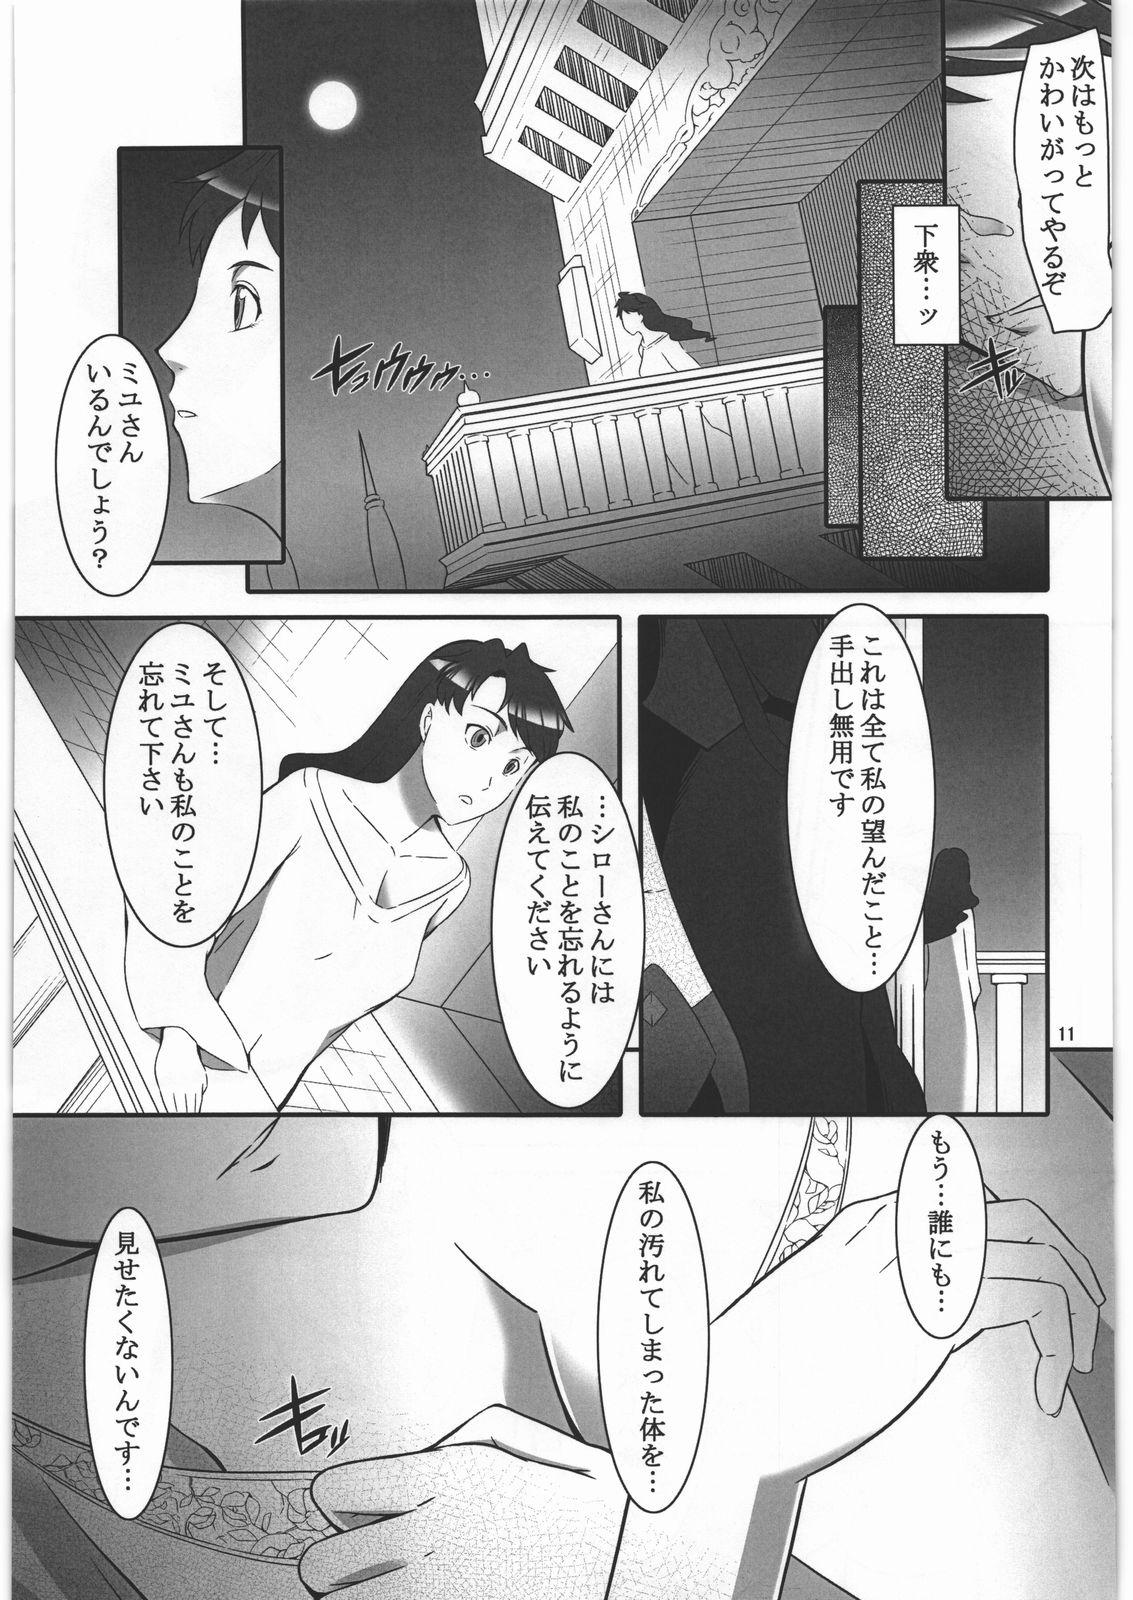 The Hitomigokuu - Mai-hime Mai-otome Boy Girl - Page 10